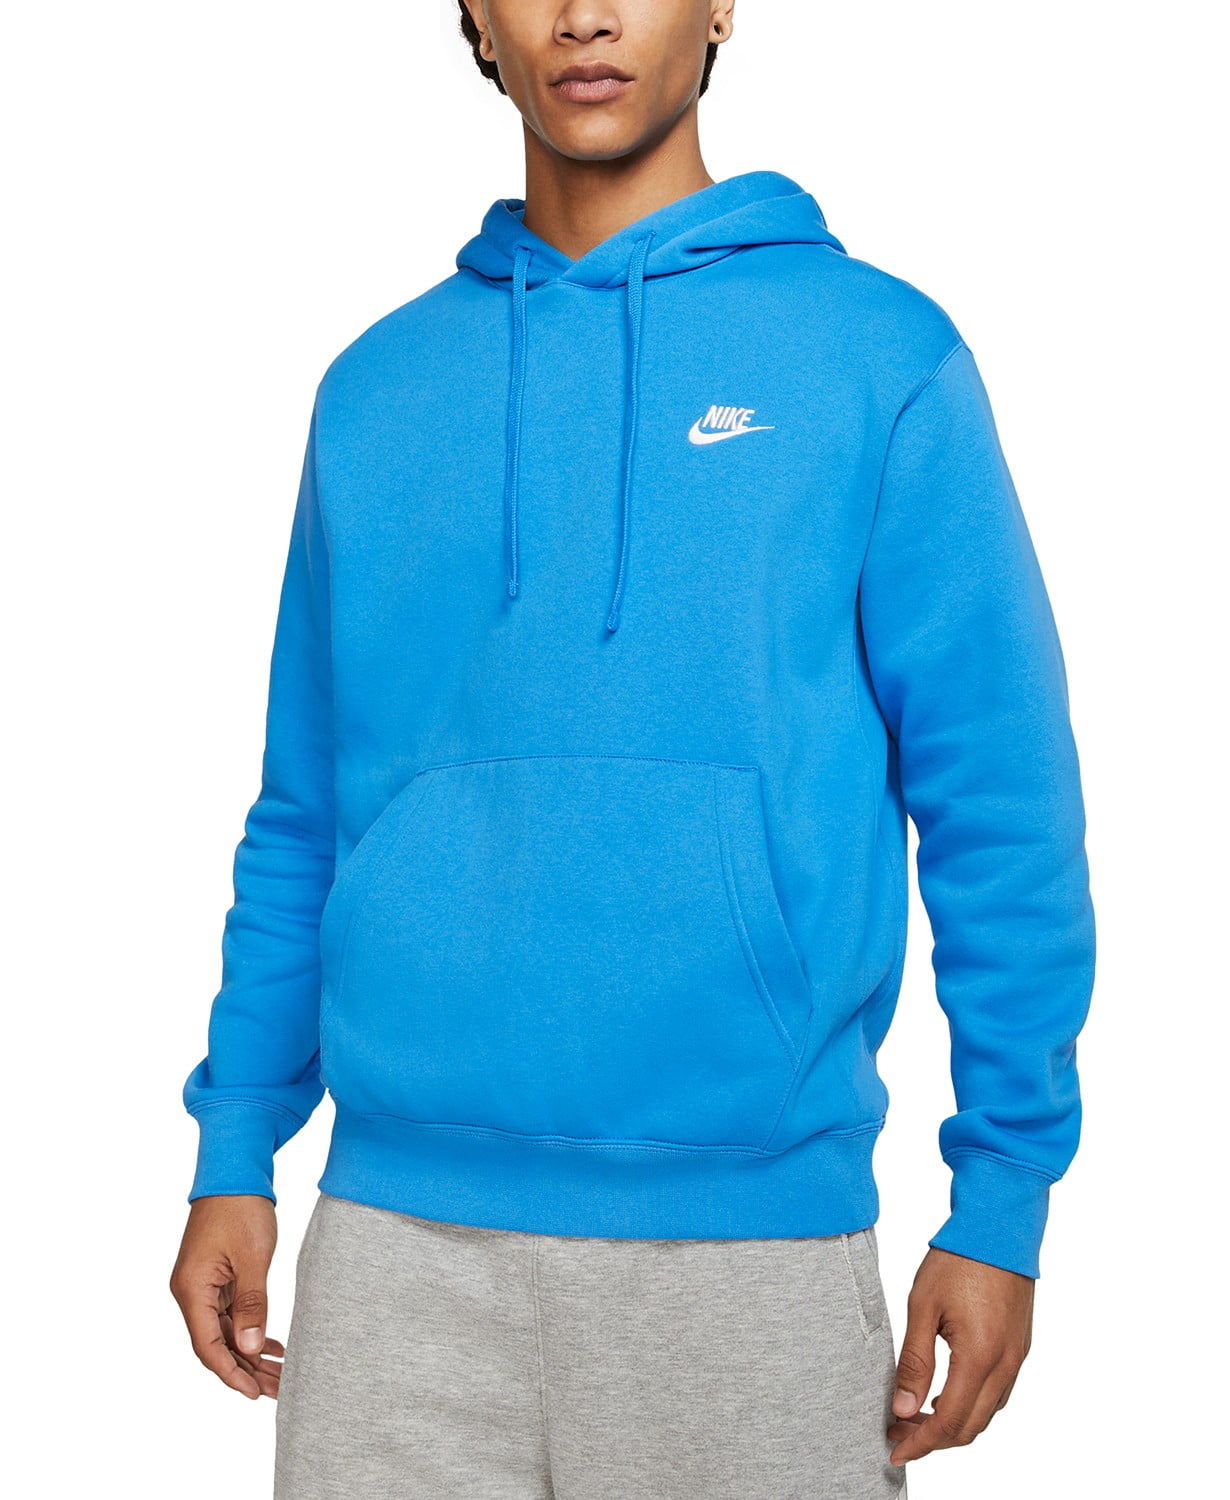 condoom geroosterd brood Van Nike Men's Sportswear Club Fleece Hoodie - Walmart.com